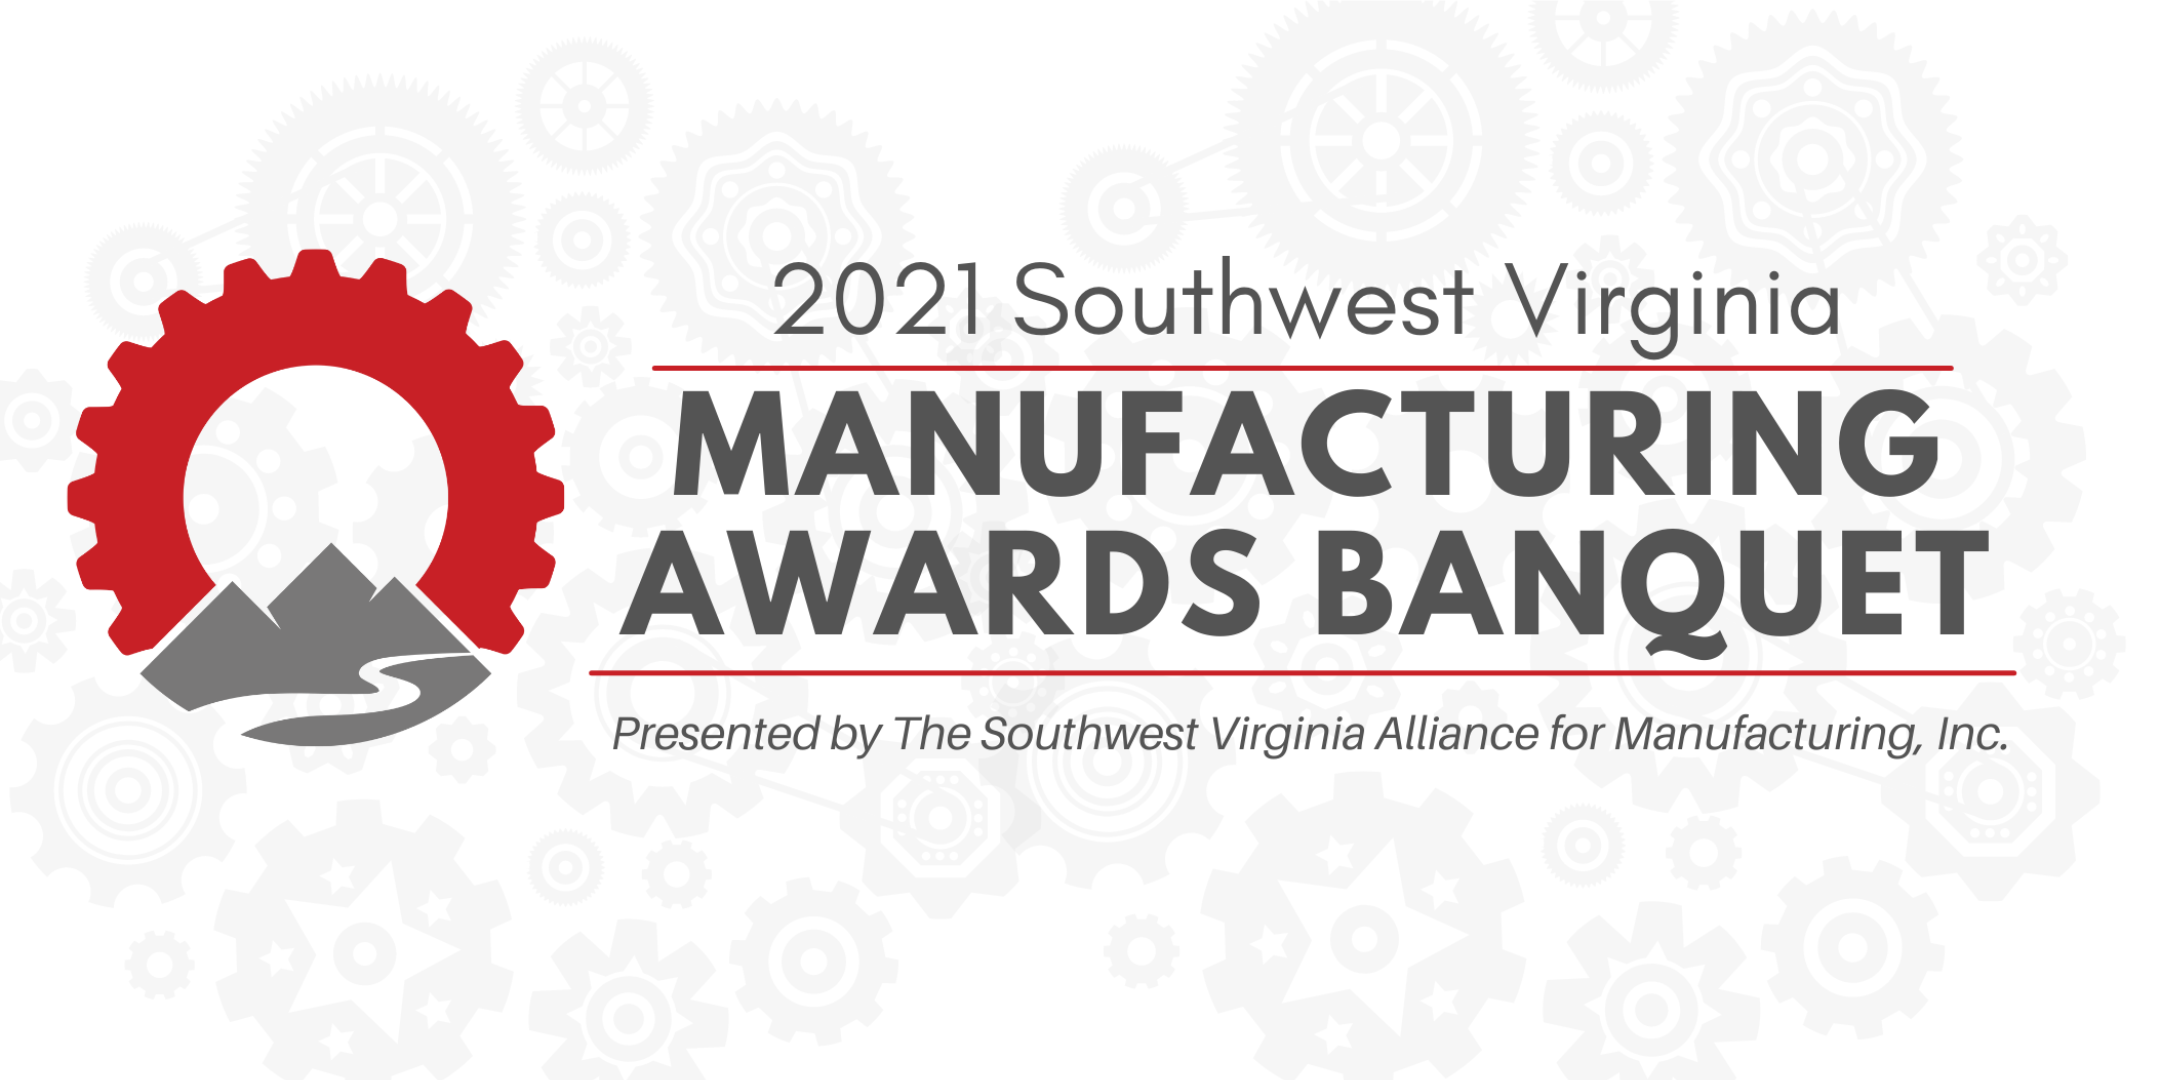 2021 Manufacturing Awards Banquet